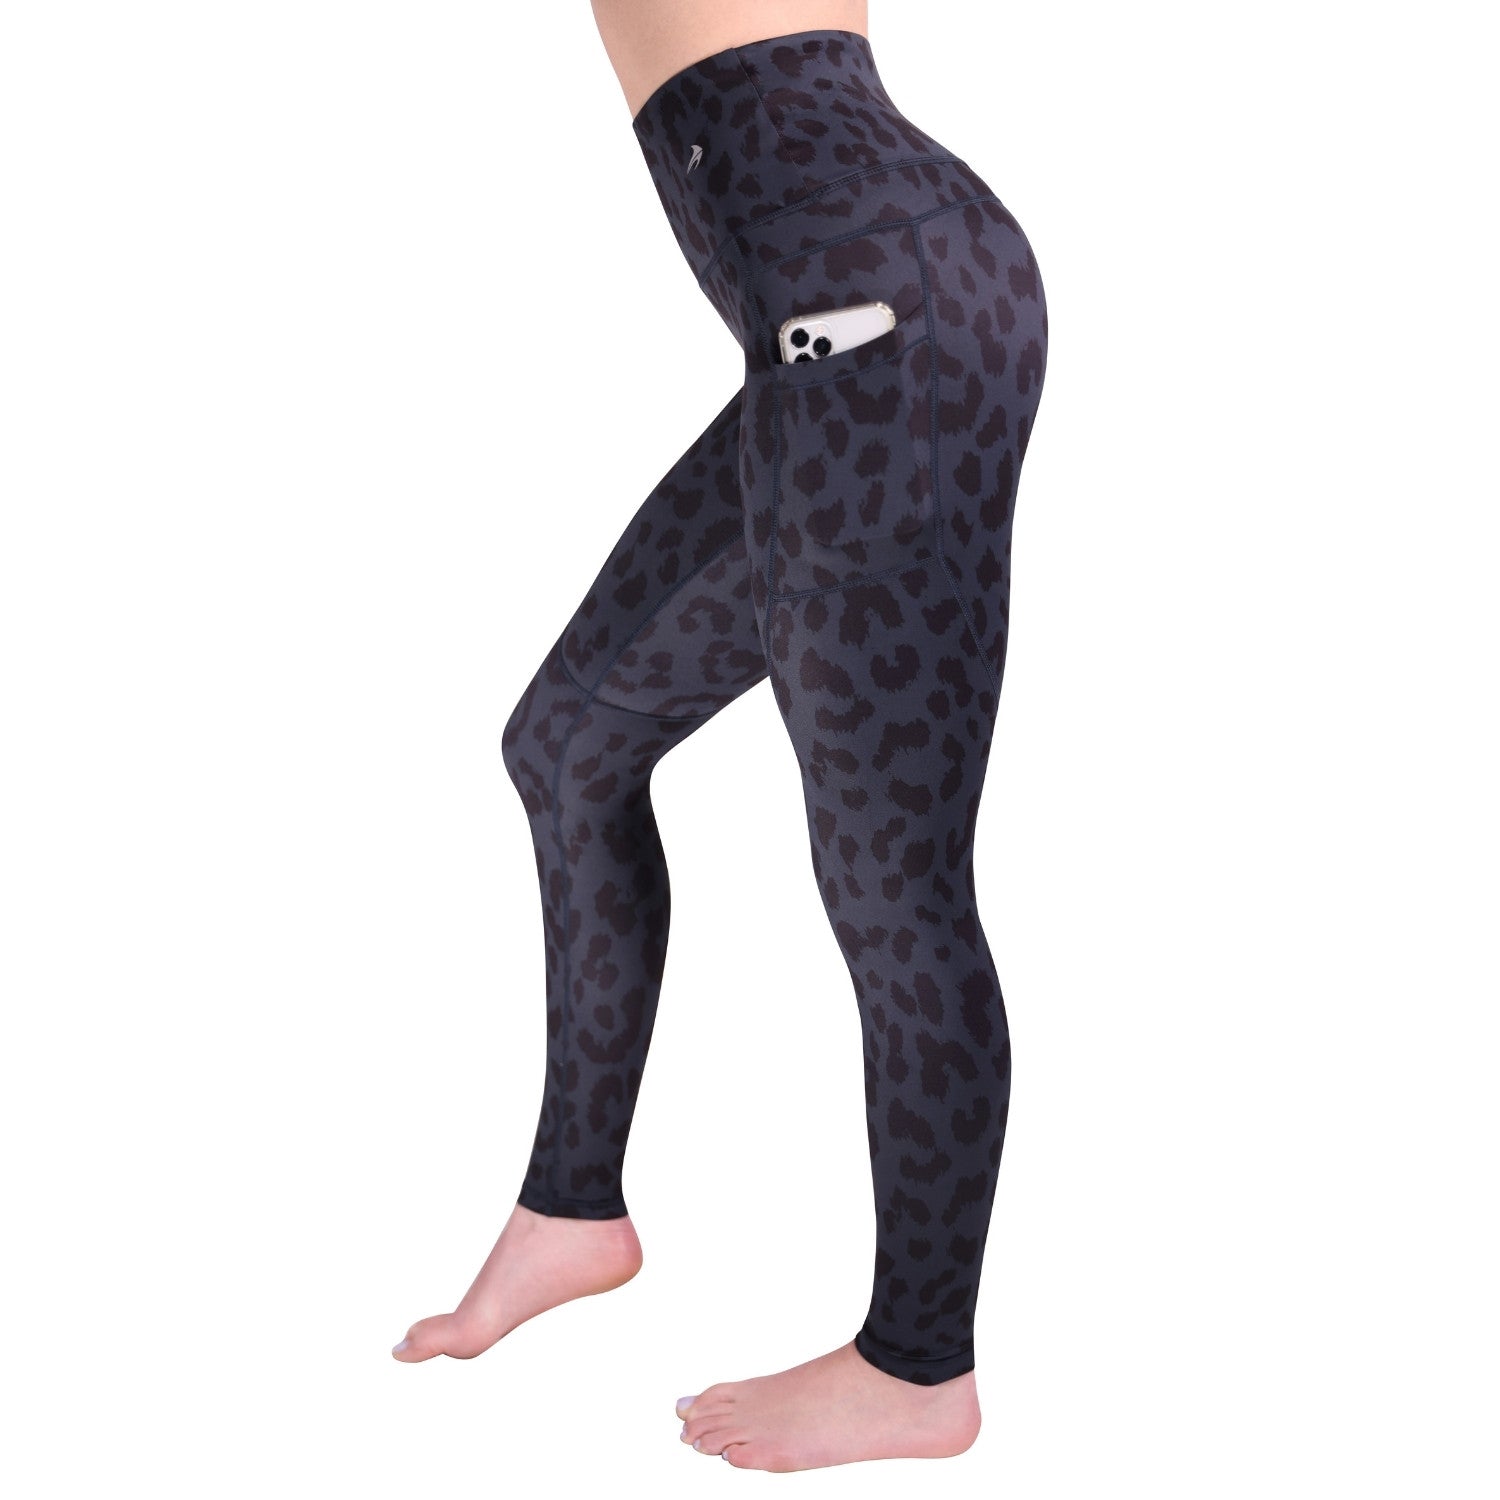 Women's Compression Leggings Super High Waist W/ Pockets - Leopard Black